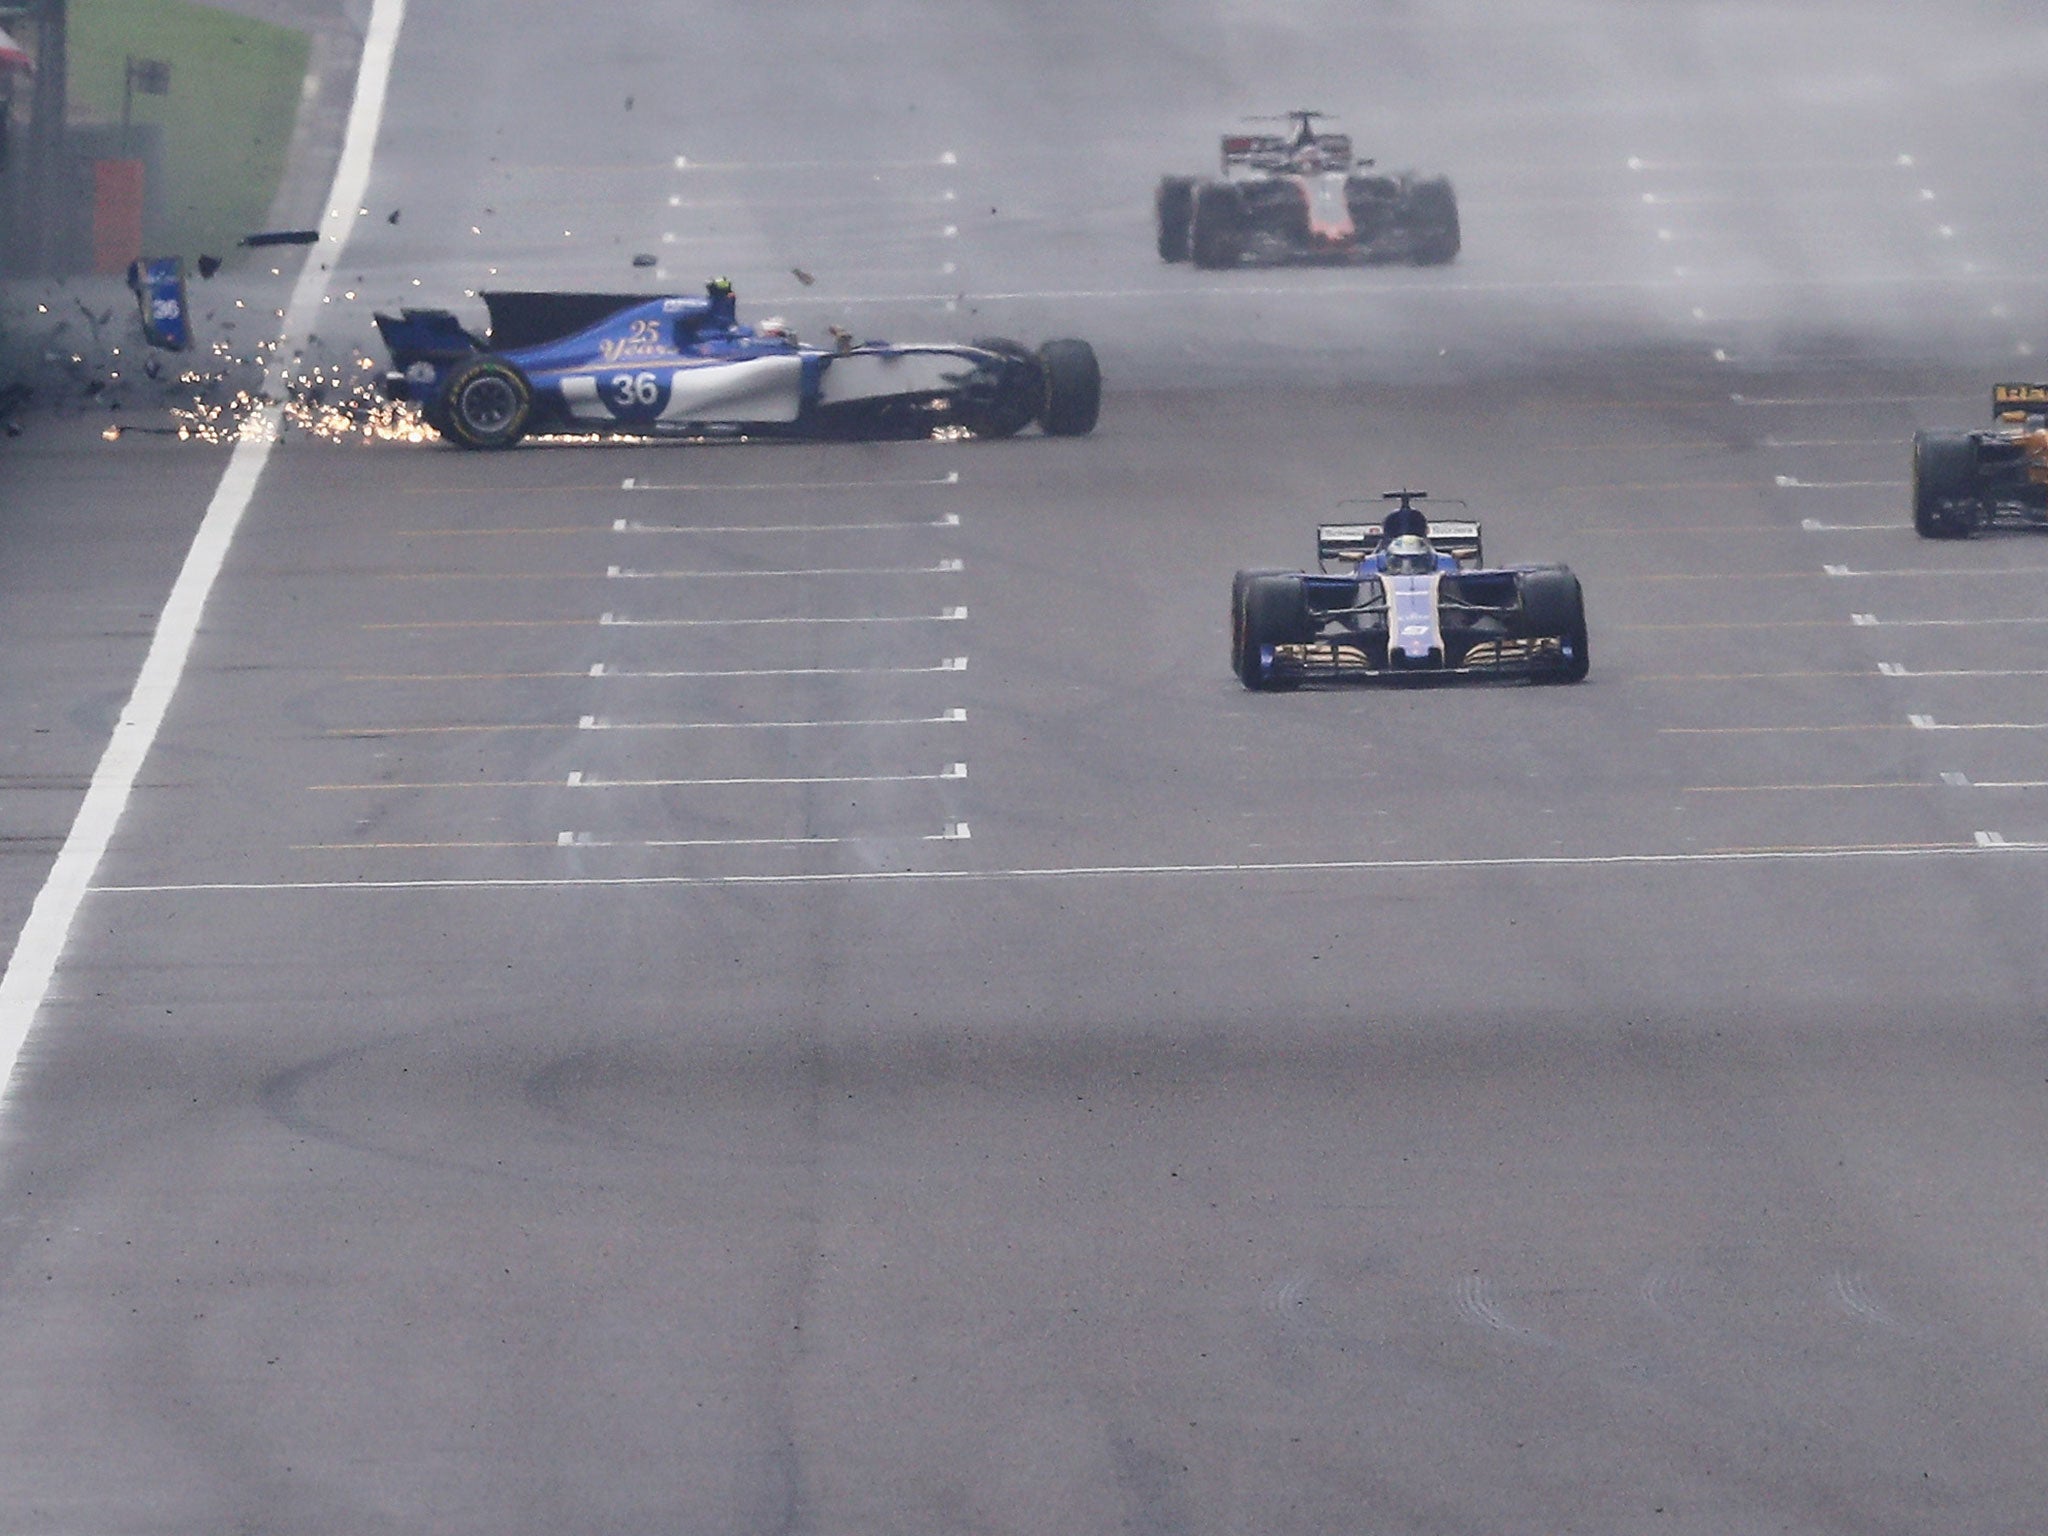 Antonio Giovinazzi lost control of his Sauber on the start-finish straight